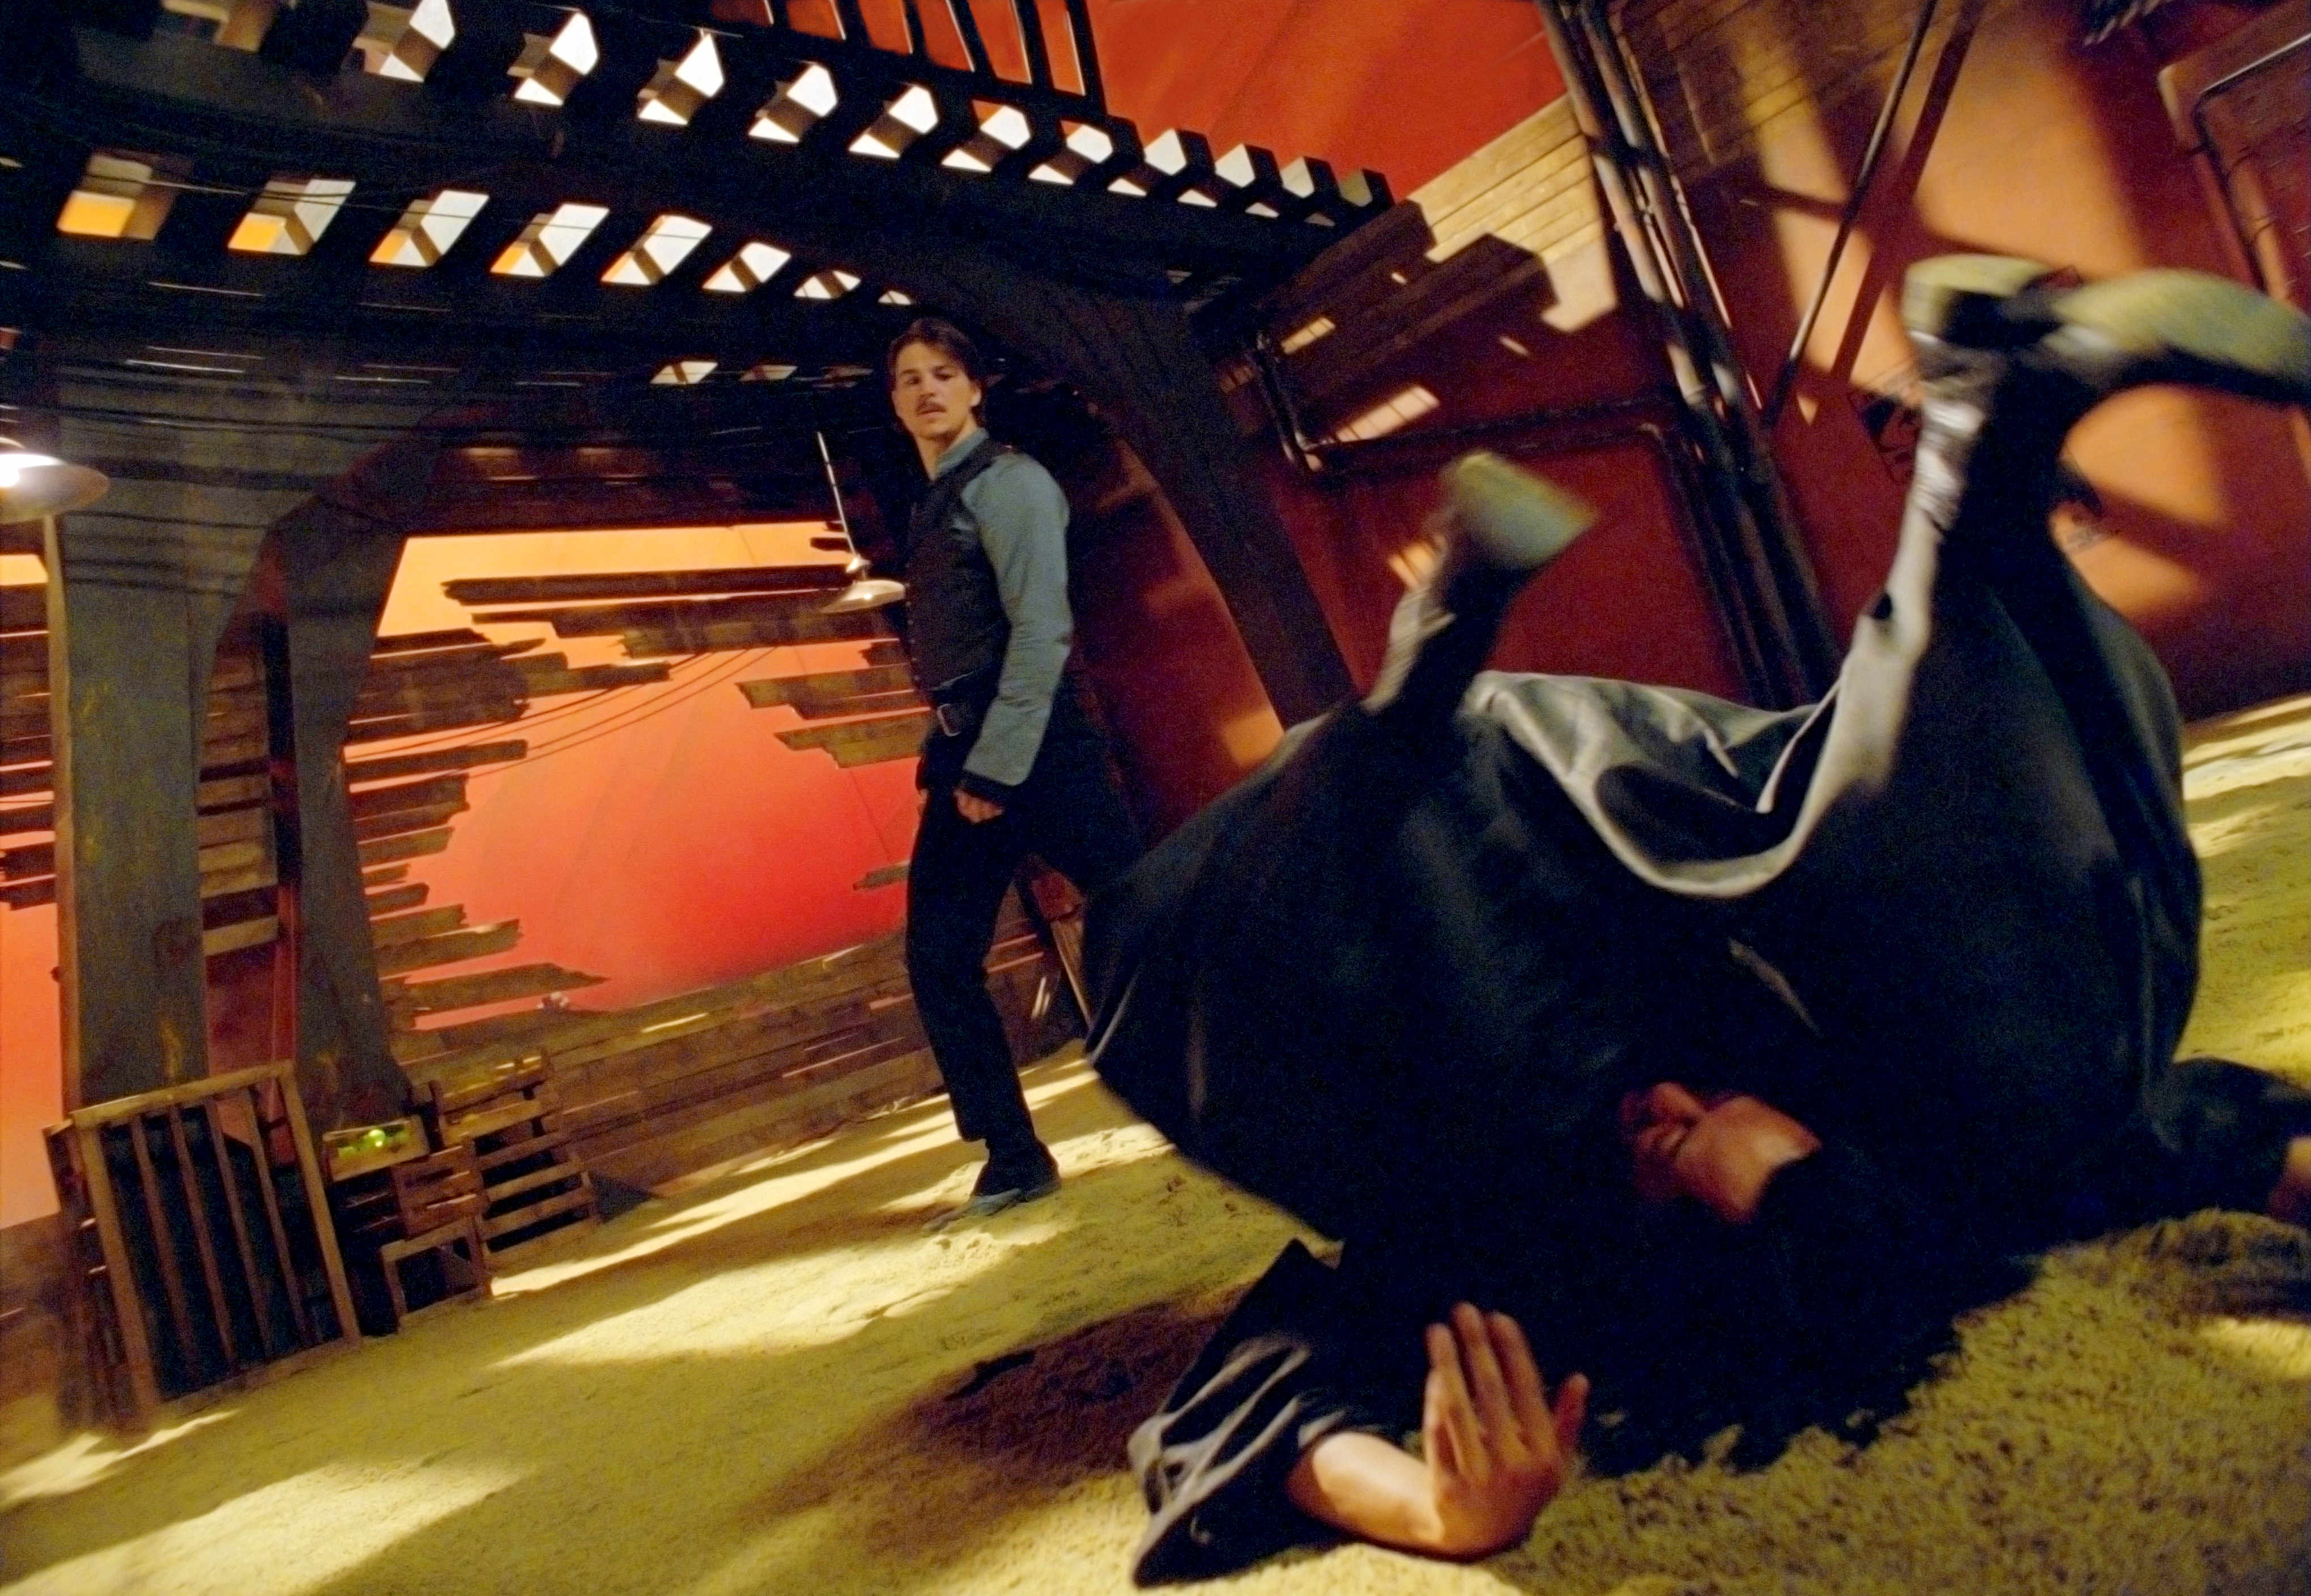 A scene from ARC Entertainment's Bunraku (2011)